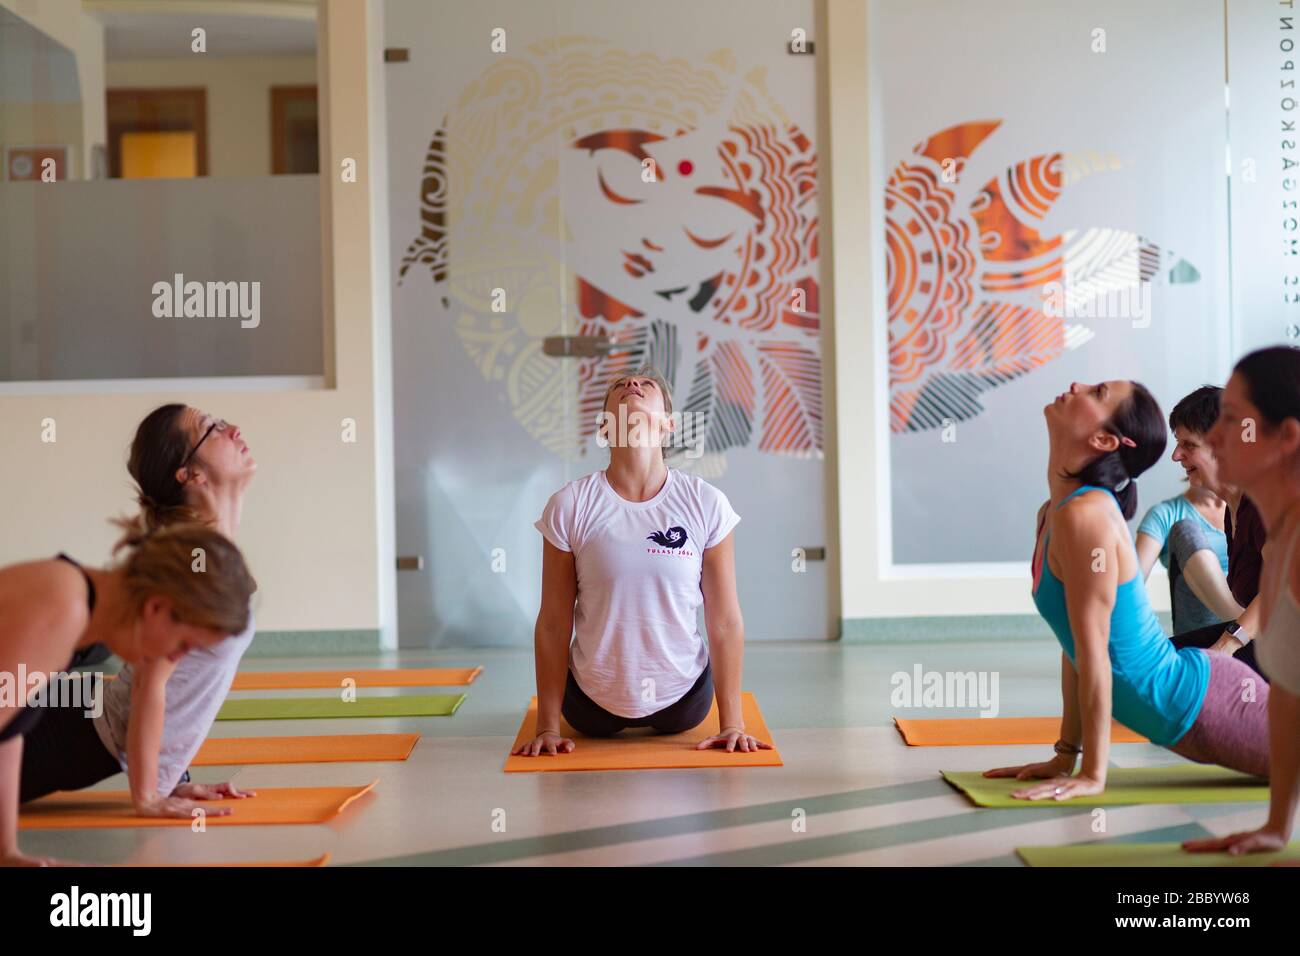 Hatha yoga class in progress Stock Photo